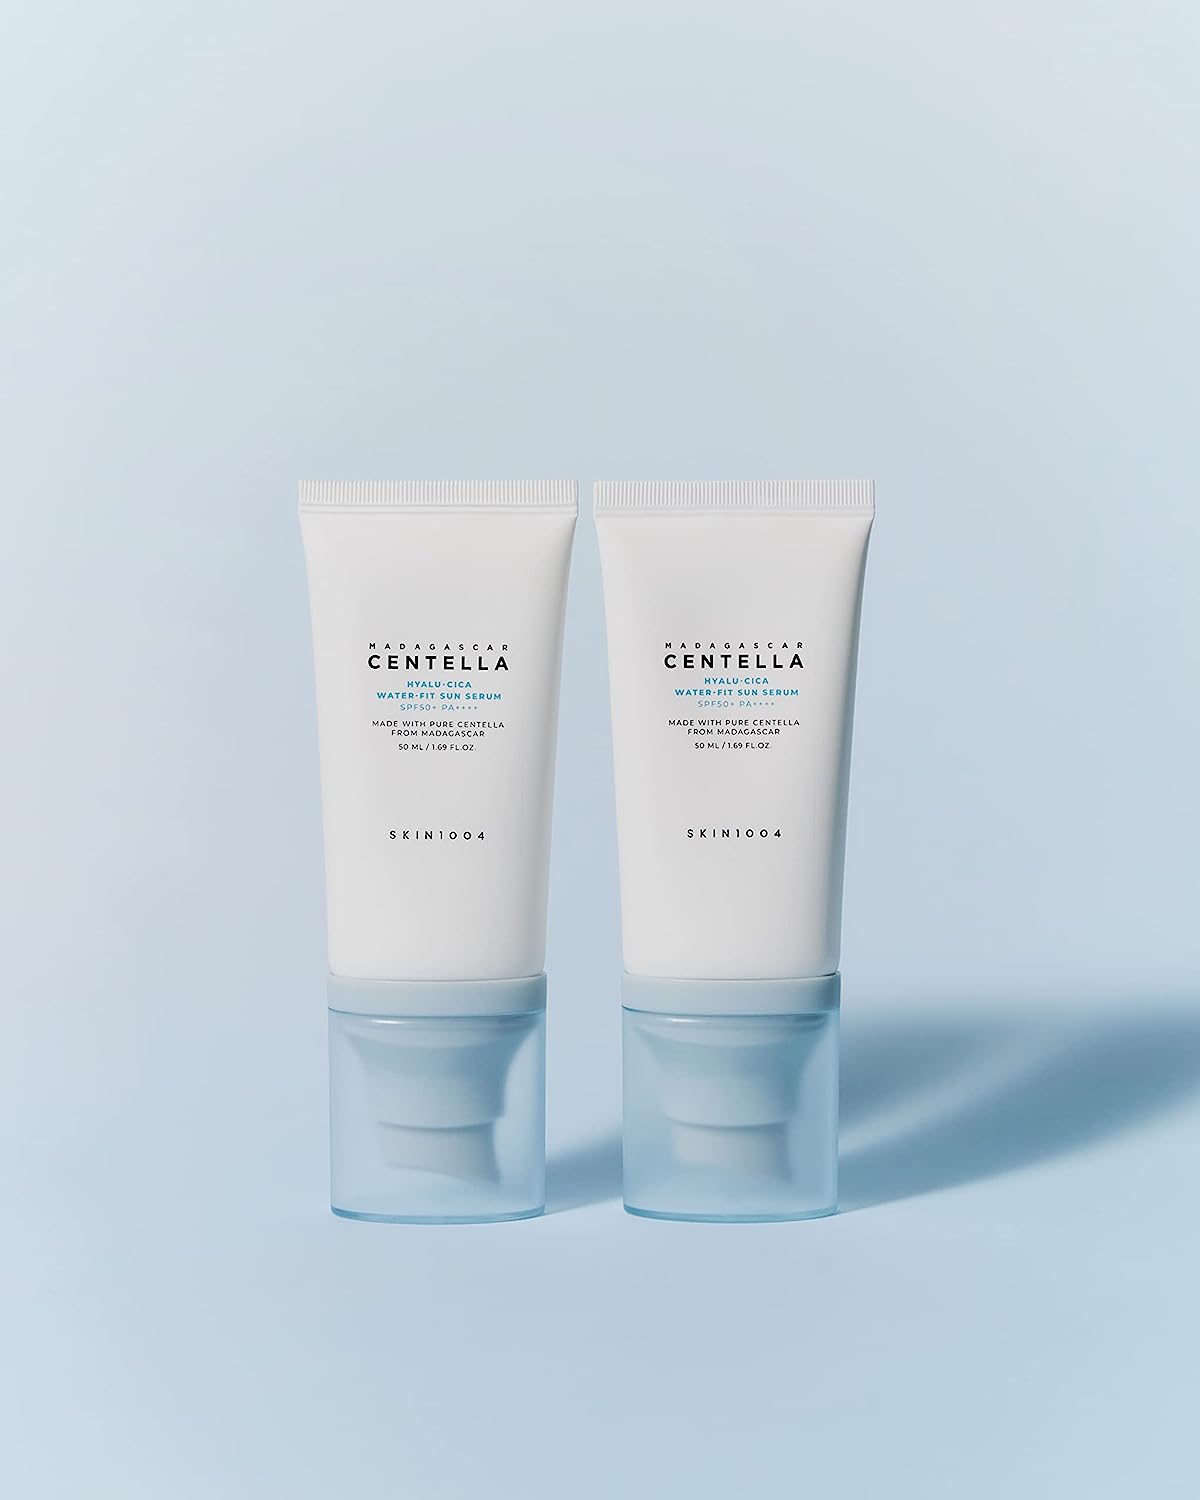 Skin1004 Hyalu-Cica Water-Fit Sun Serum Health & Beauty Skin1004 2 x 50ml (Twin pack)  